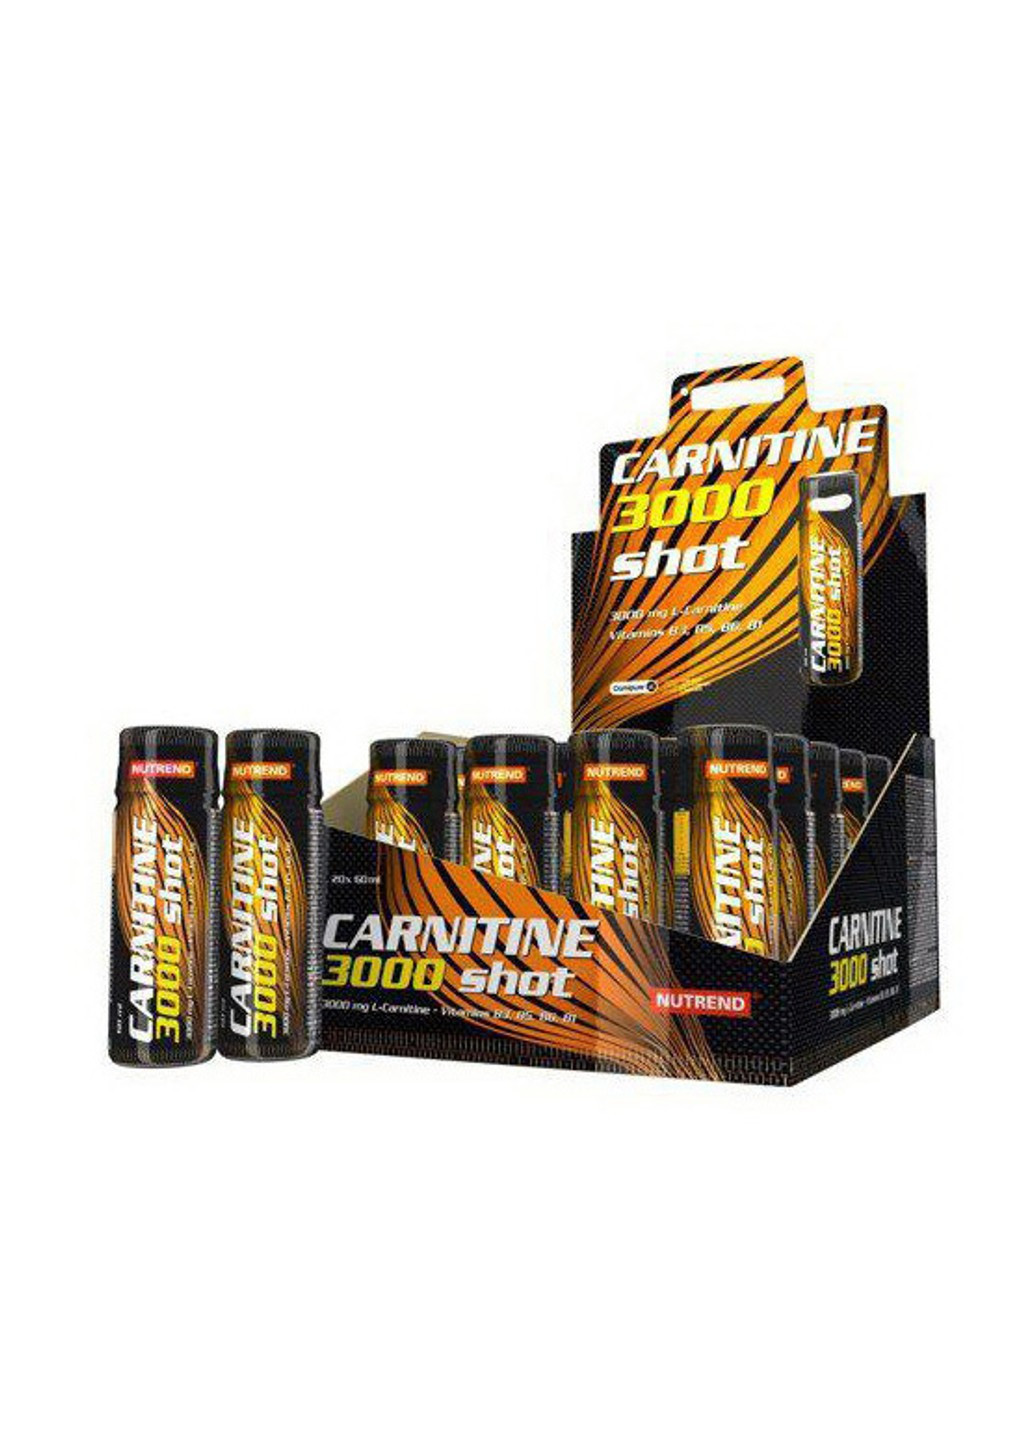 Л-карнитин Carnitine 3000 Shot 20 х 60 мл Апельсин Nutrend (255362095)